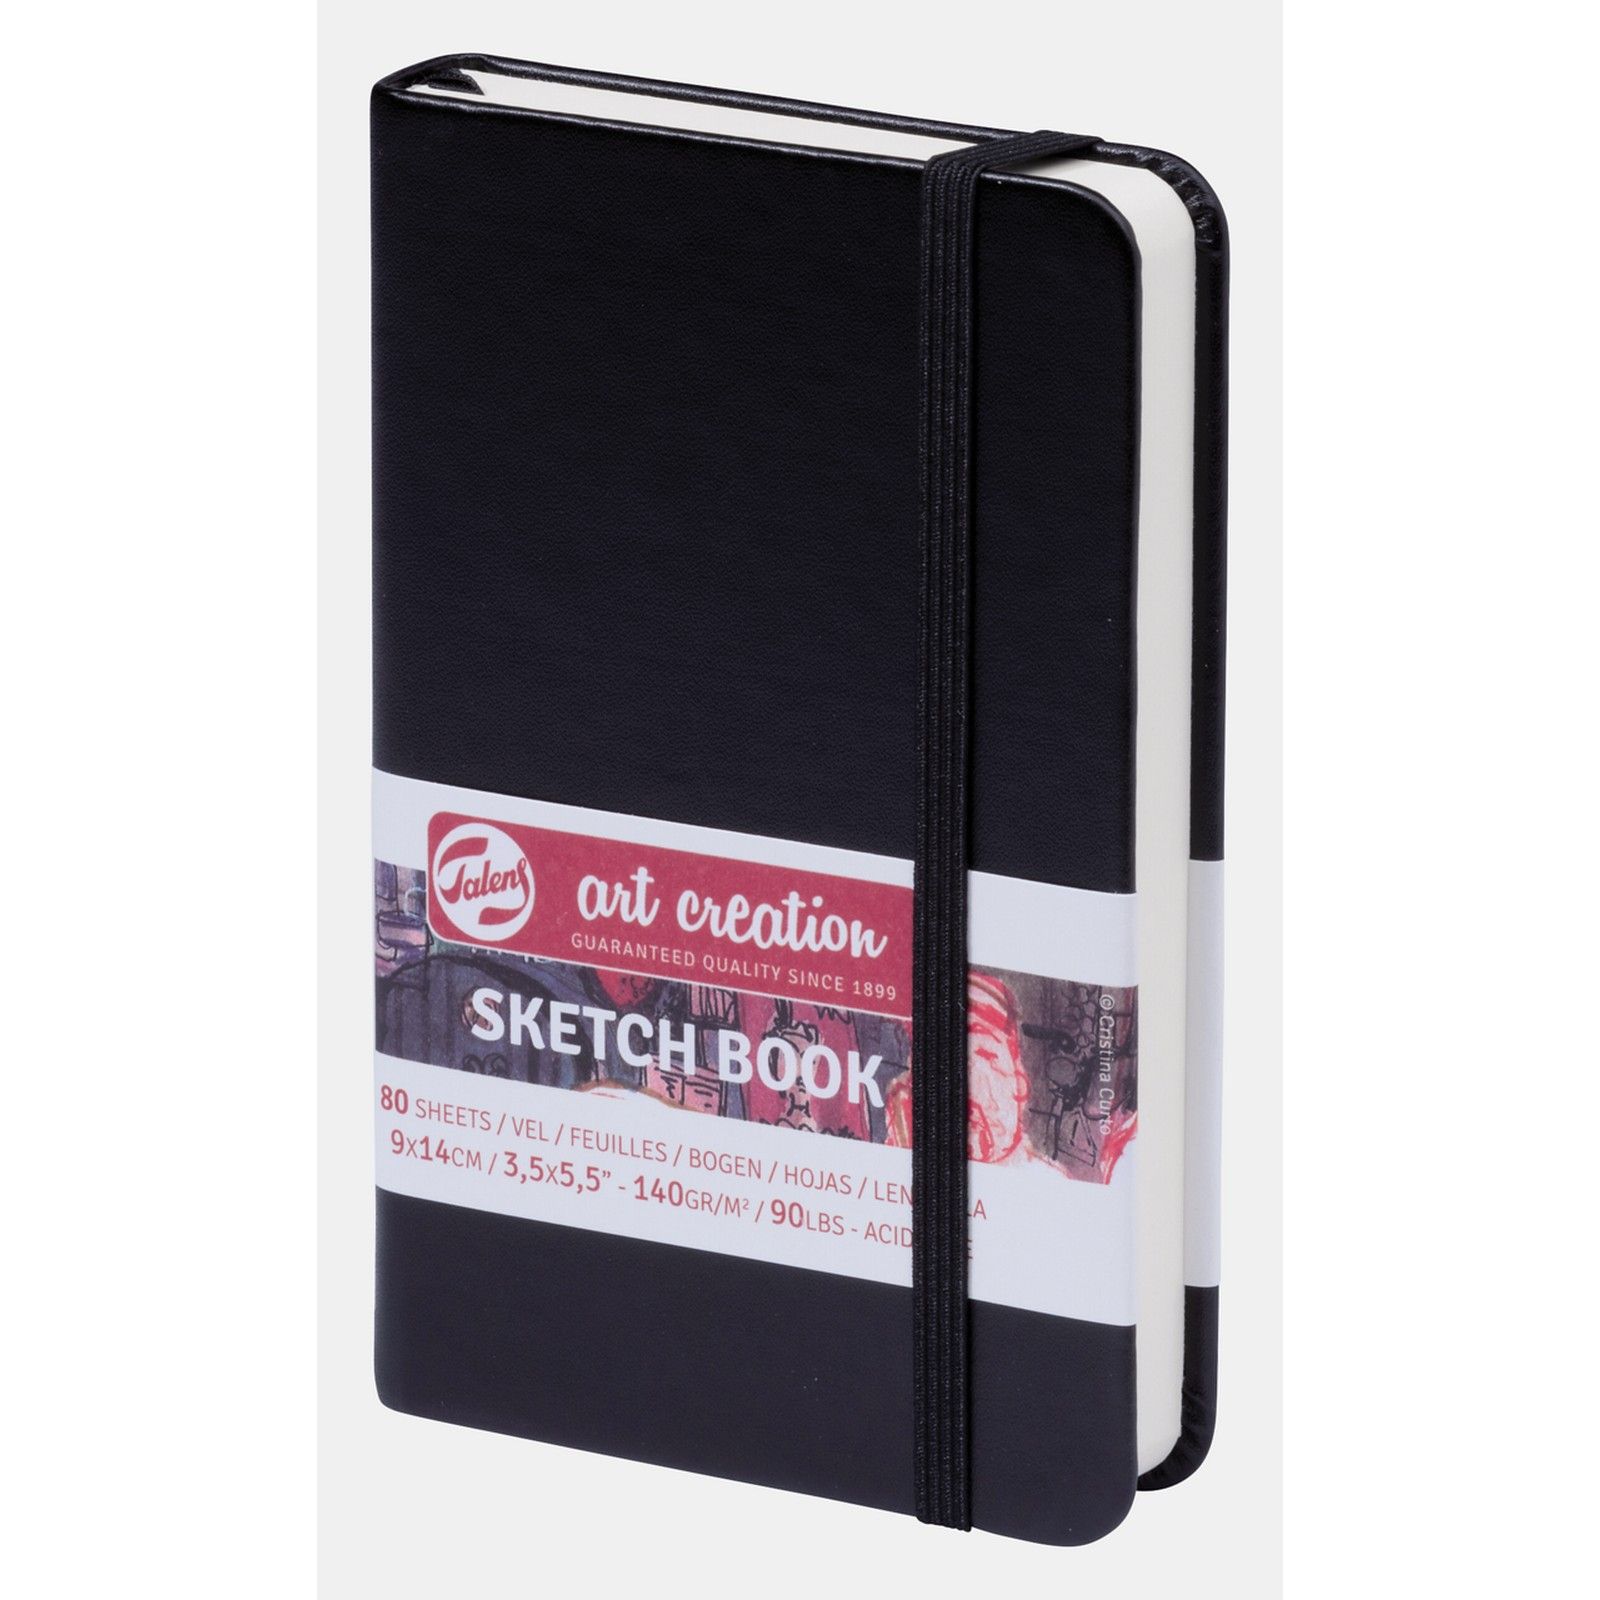 Talens Art Creation • Sketchbook Black 9x14cm